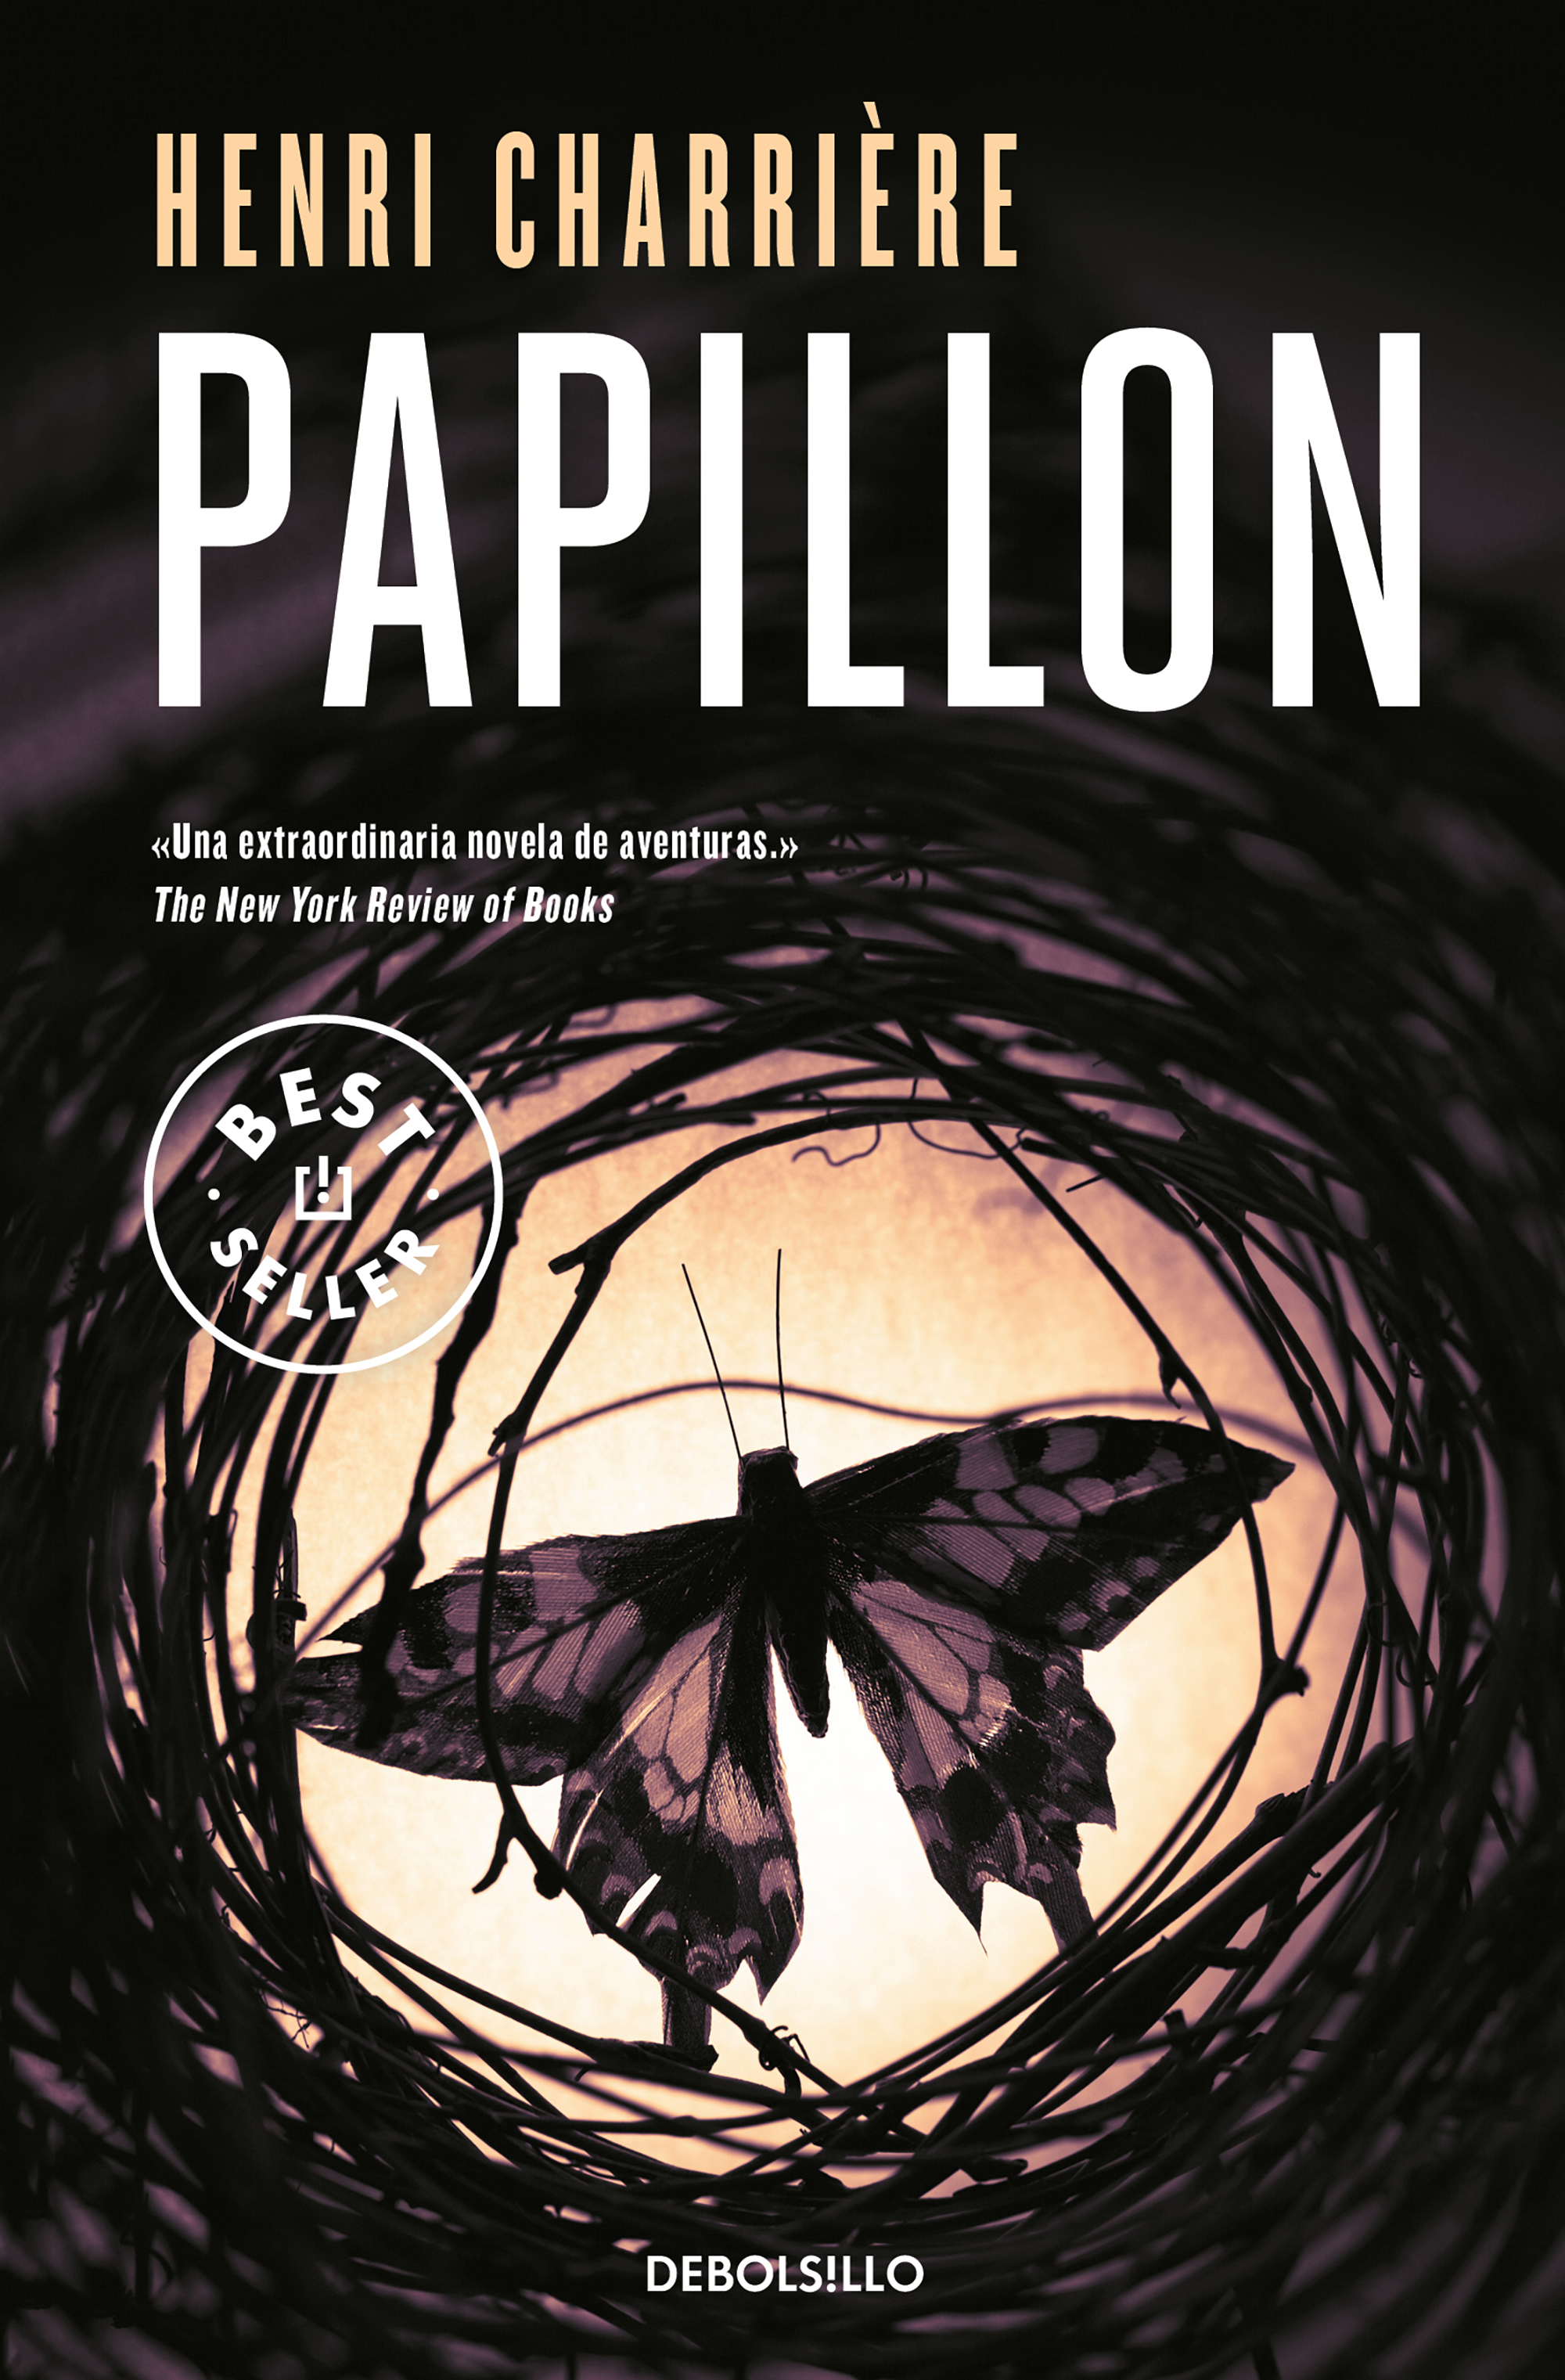 PAPILLON